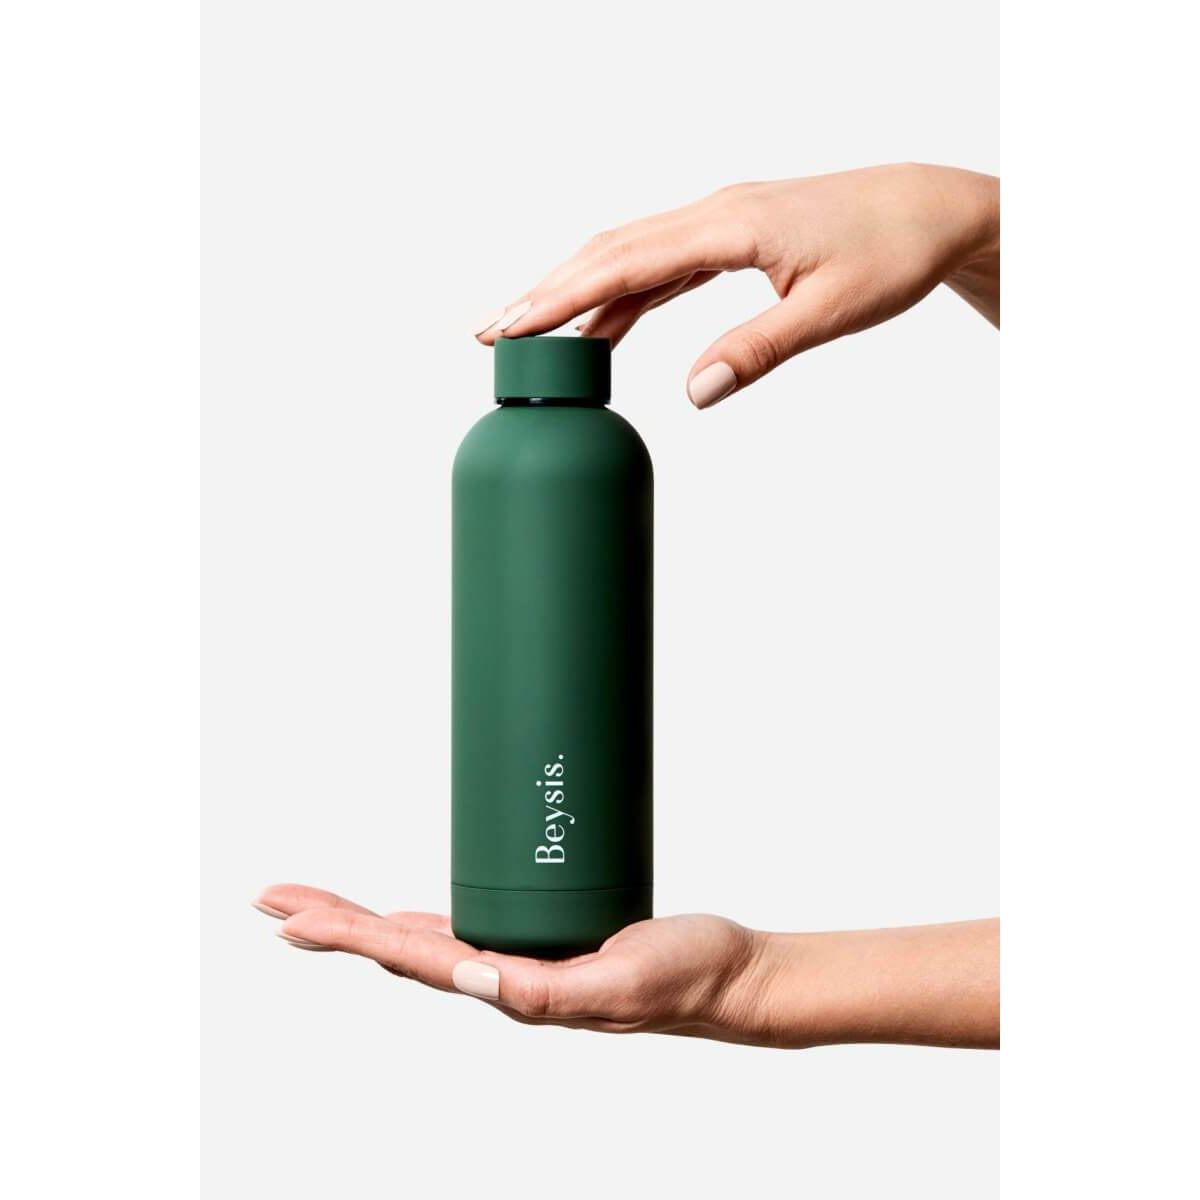 Beysis S/S 500ml Water Bottle